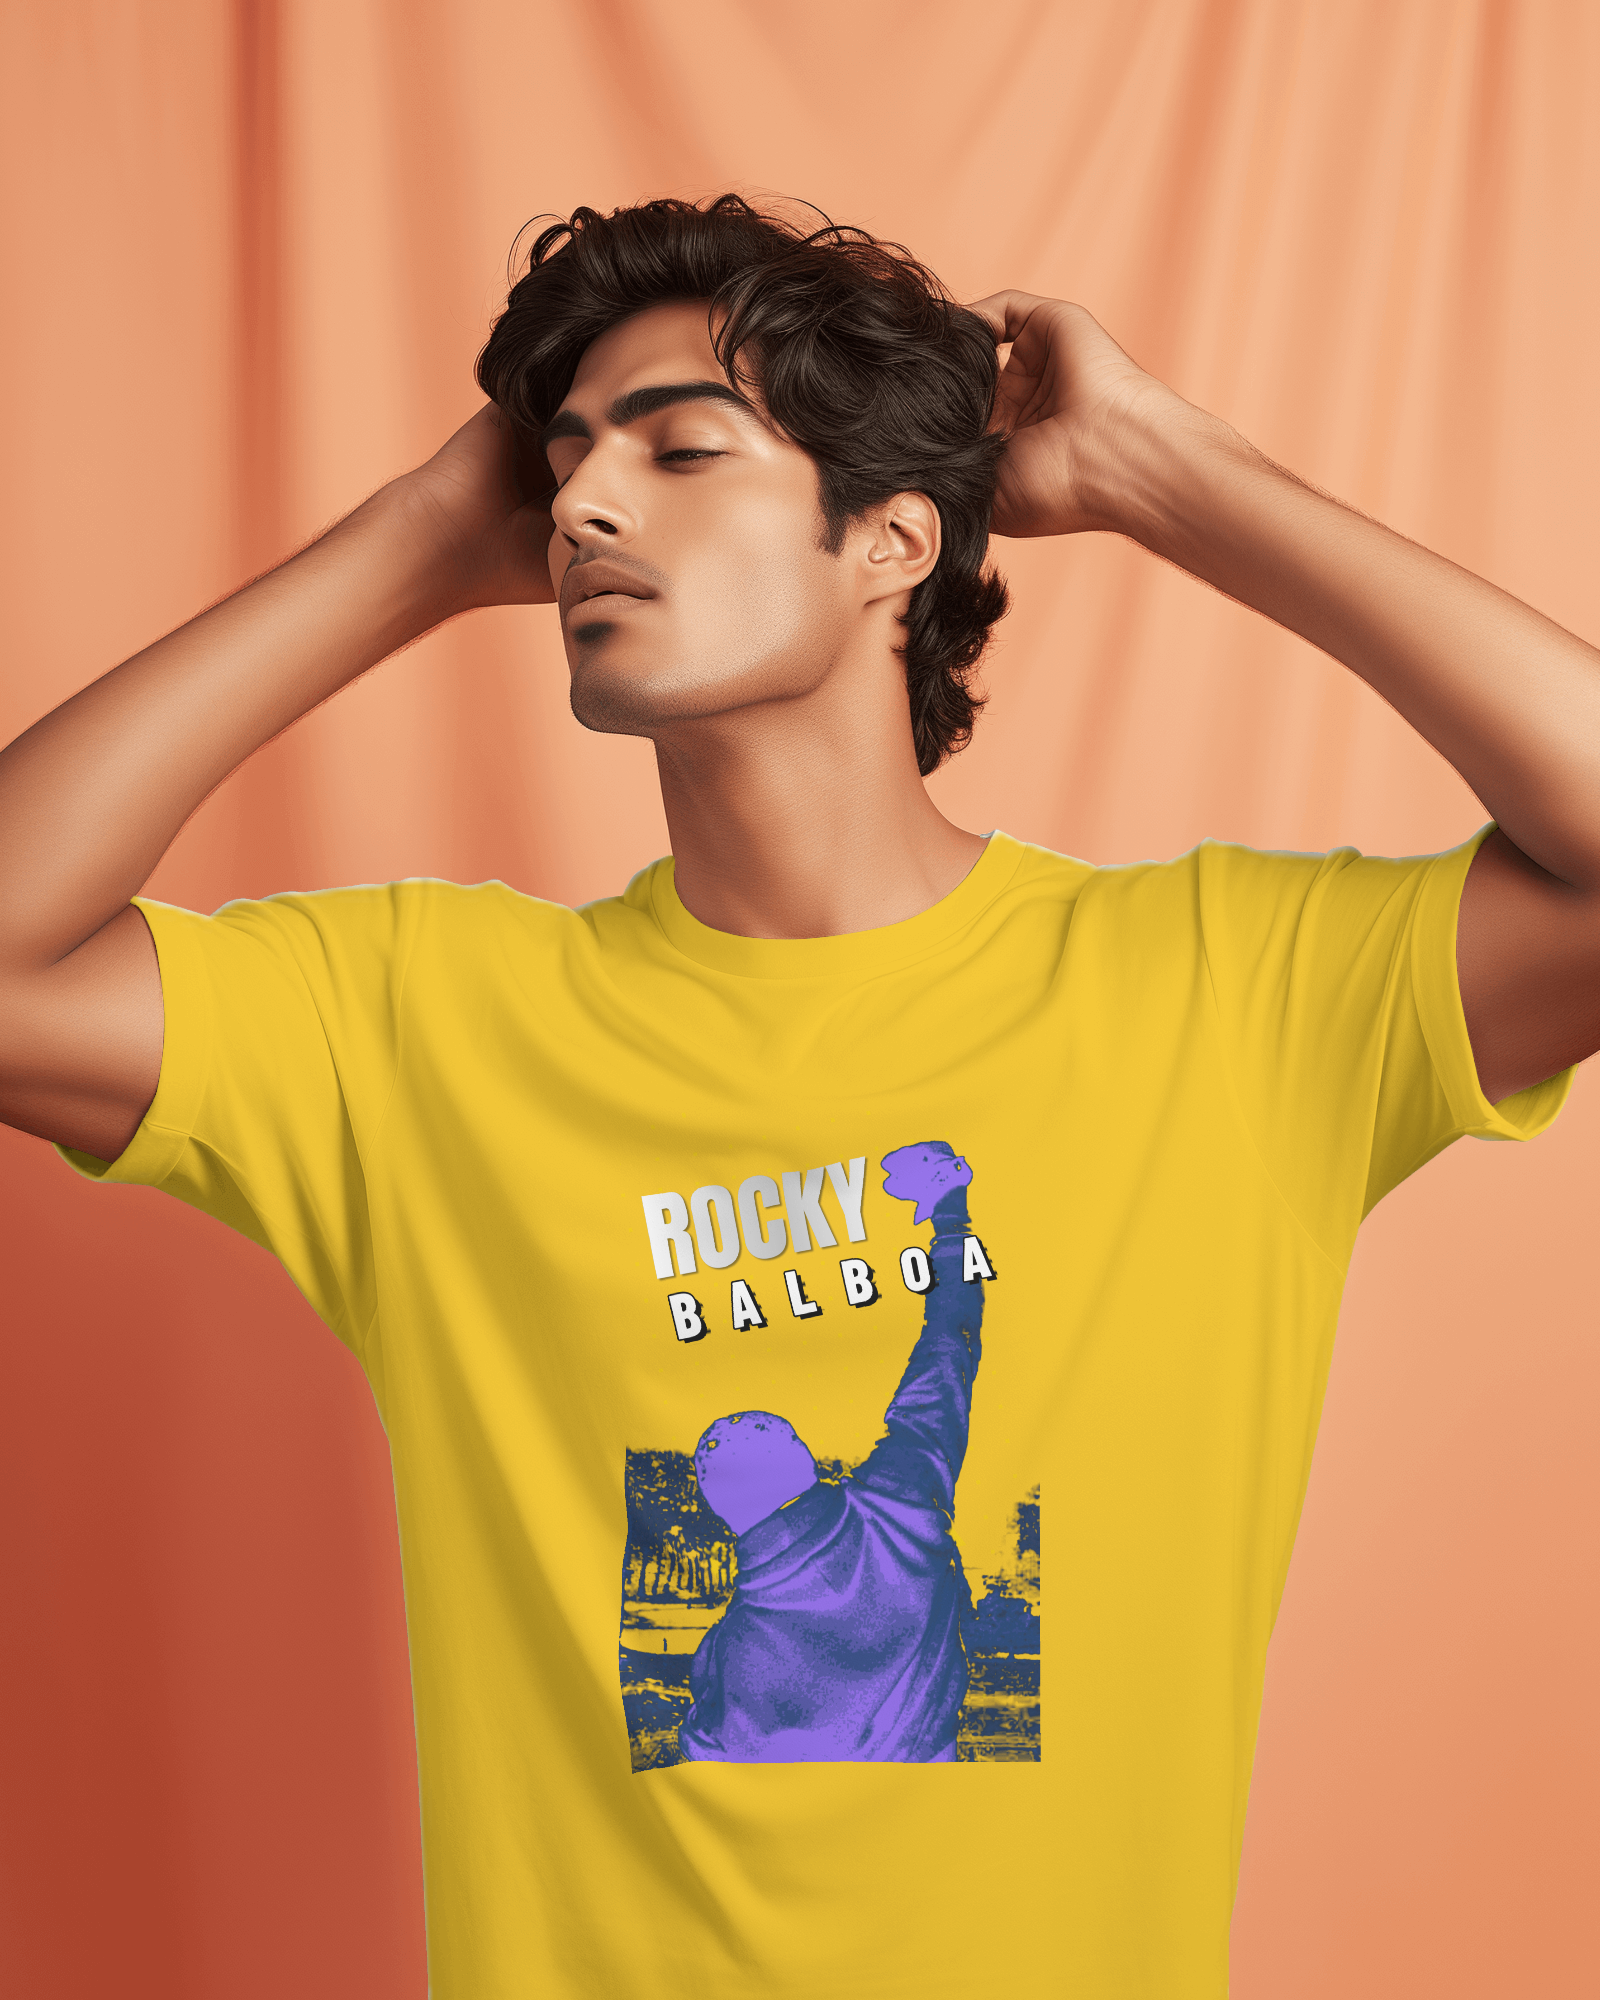 "ROCKY BALBOA" Poster Printed Tshirt | YELLOW COLOR